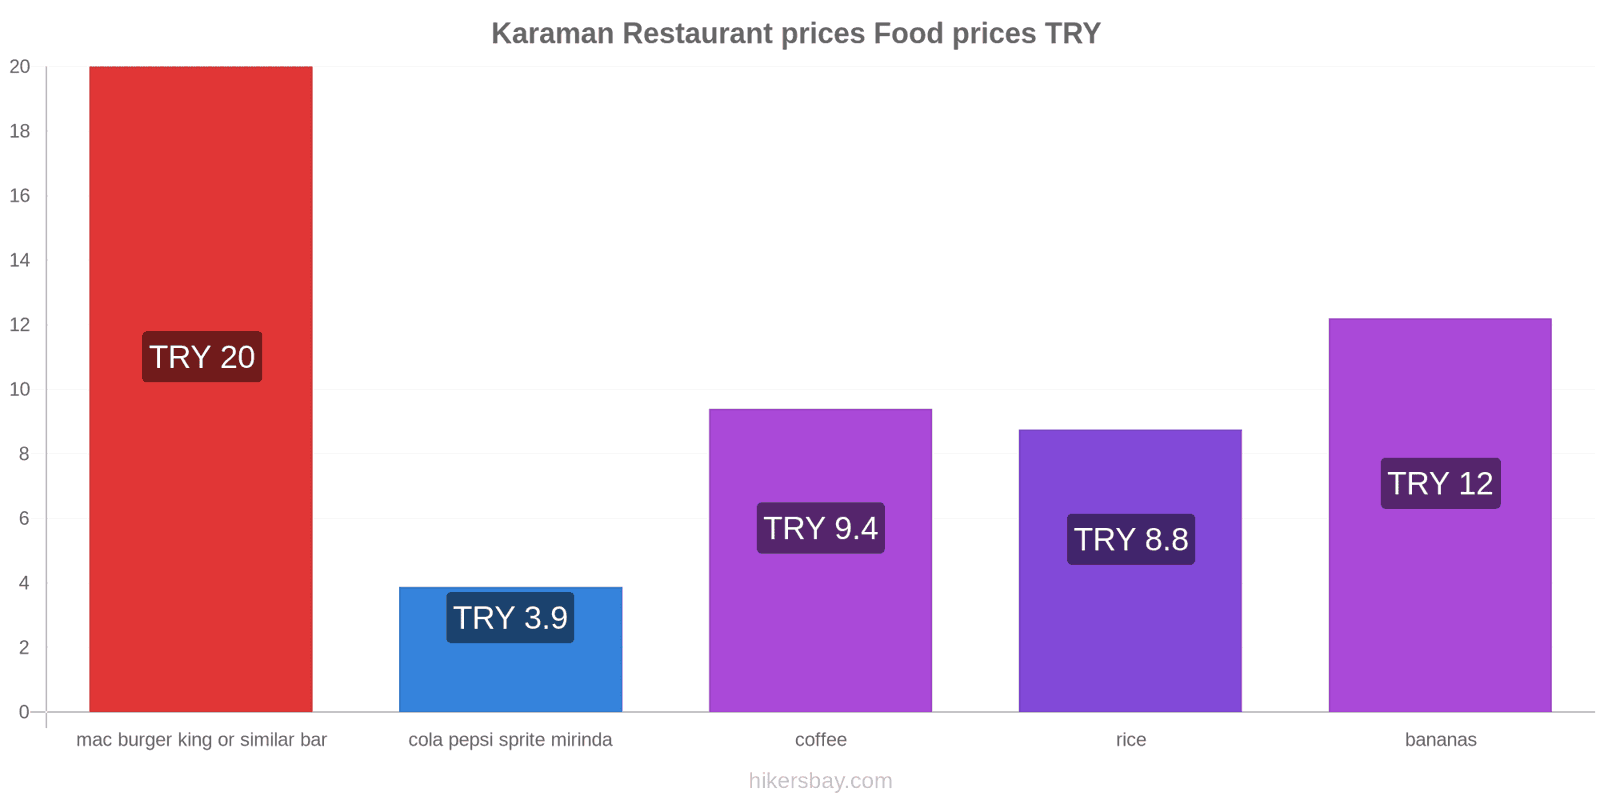 Karaman price changes hikersbay.com